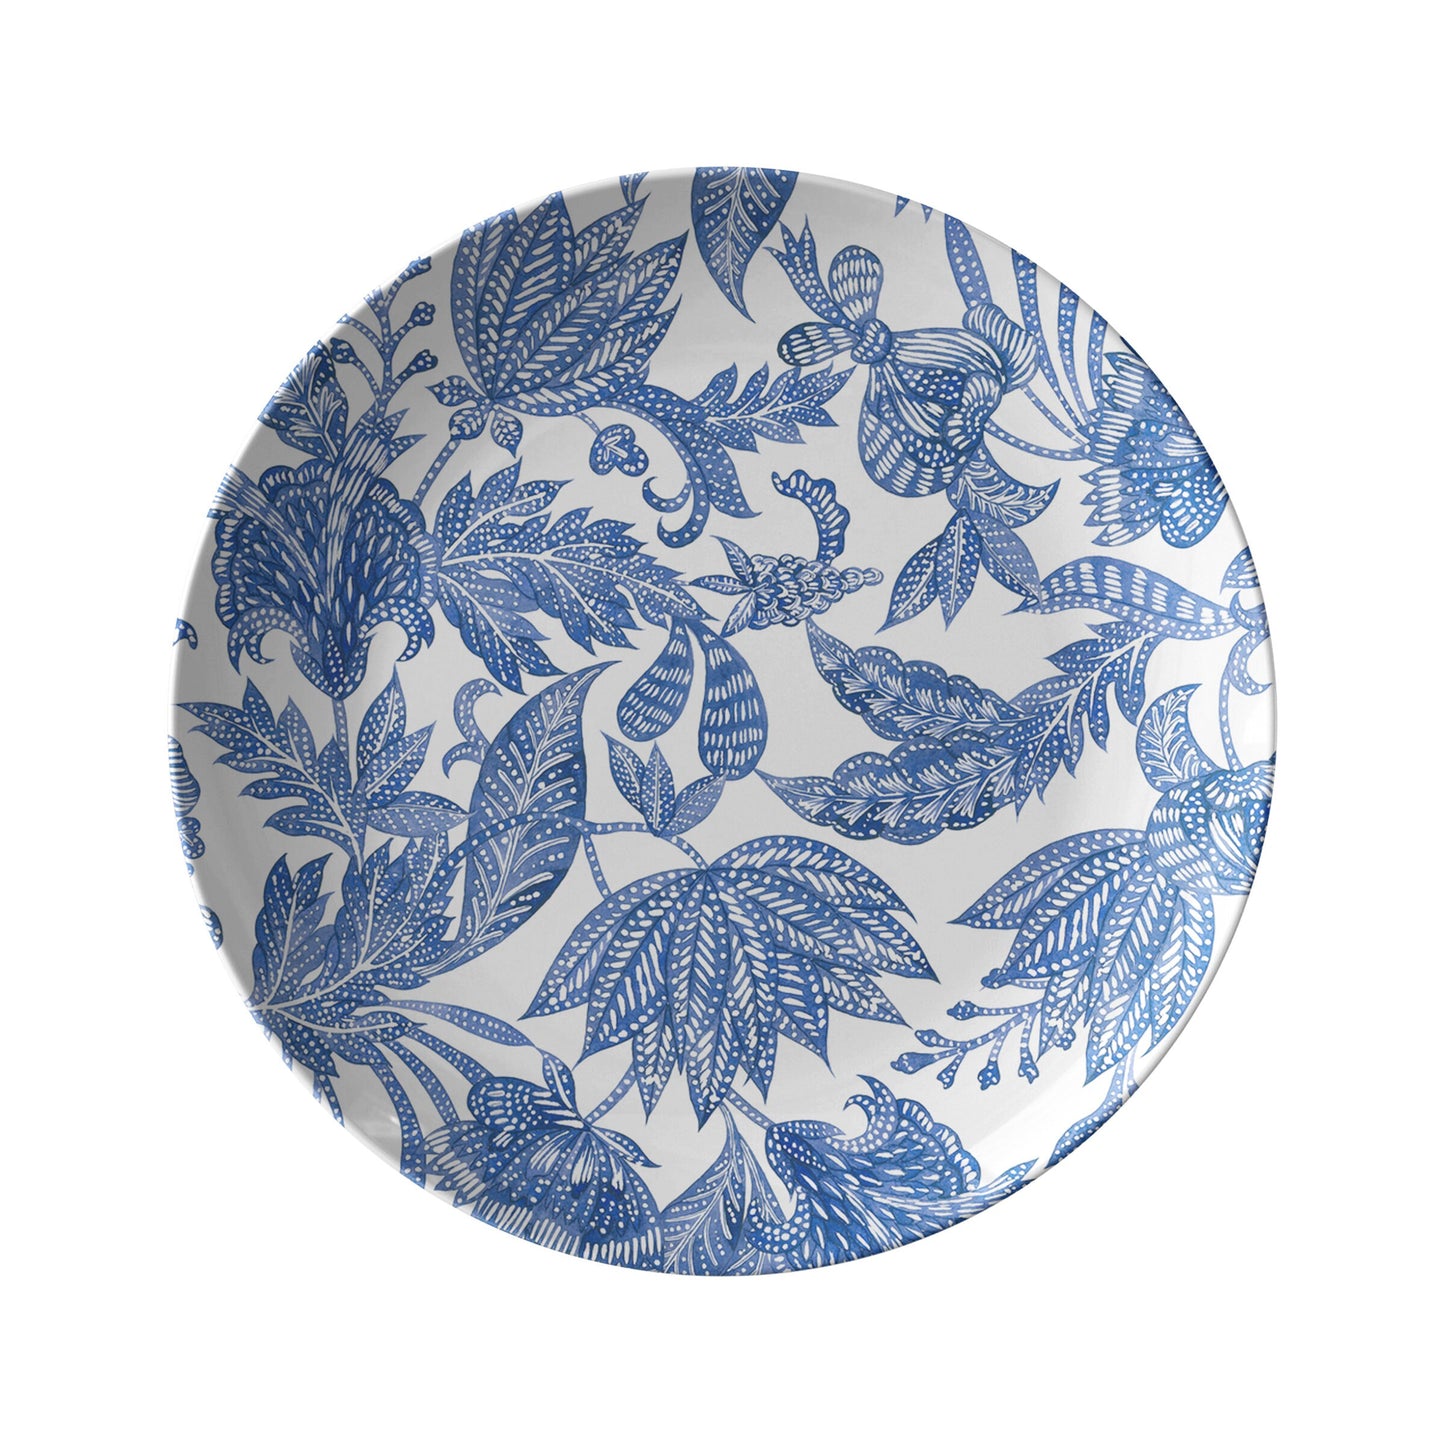 Floral Batik Plates, Set of 4, White & Blue, Luxury Thermosaf Plastic